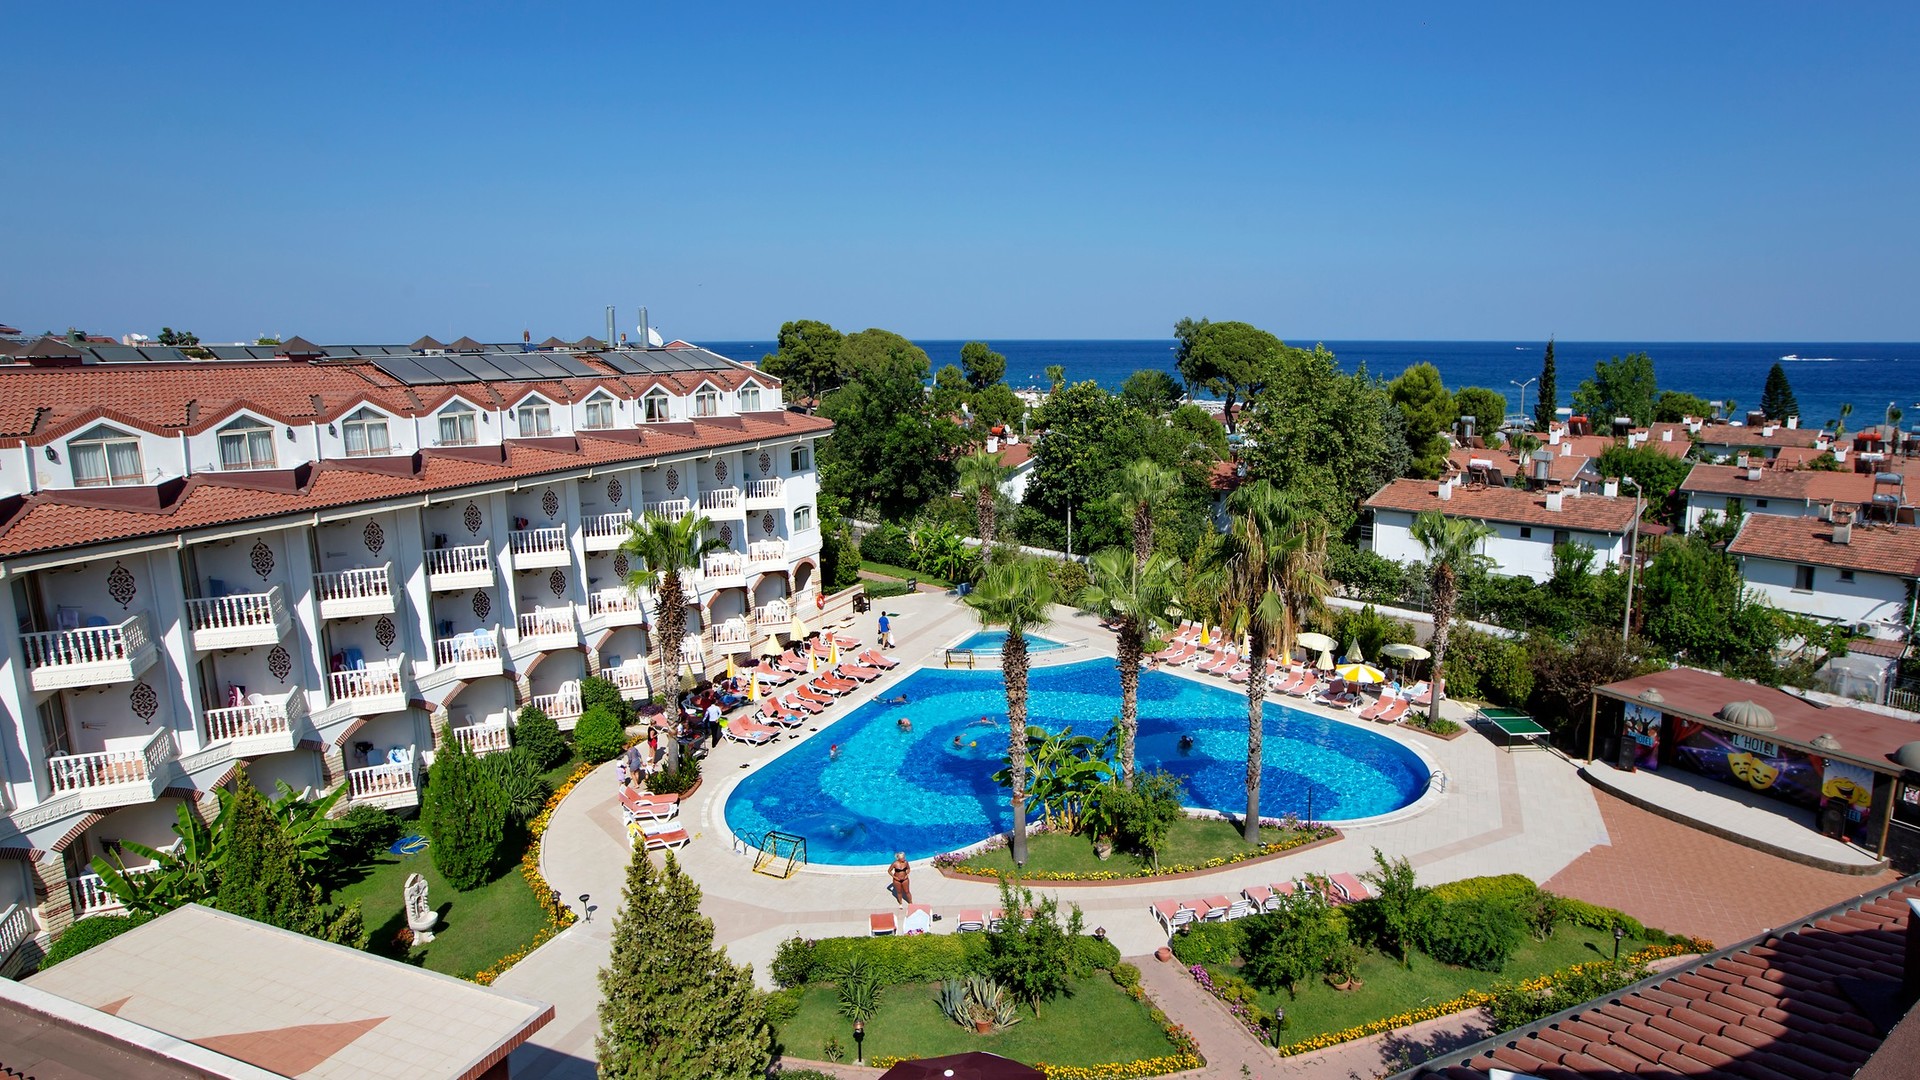 Larisa sultan beach hotel 4. Larissa Sultan's Beach 4*(Кемер,Чамьюва)-. Larissa Sultan's Beach Hotel 4 Турция.